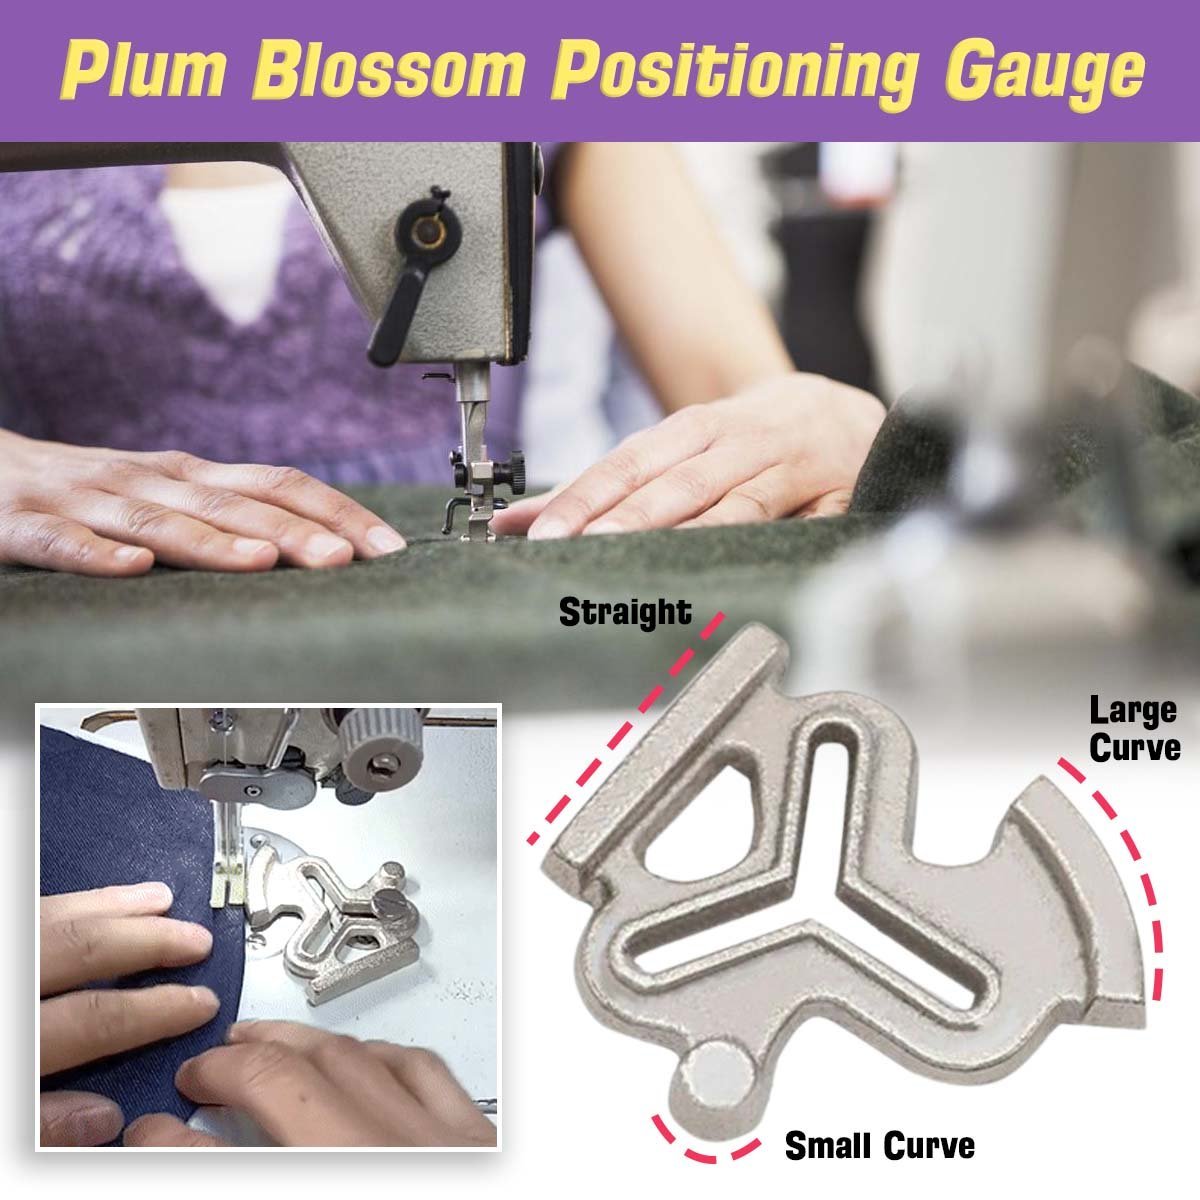 🔥HOT SALE Plum Blossom Positioning Gauge